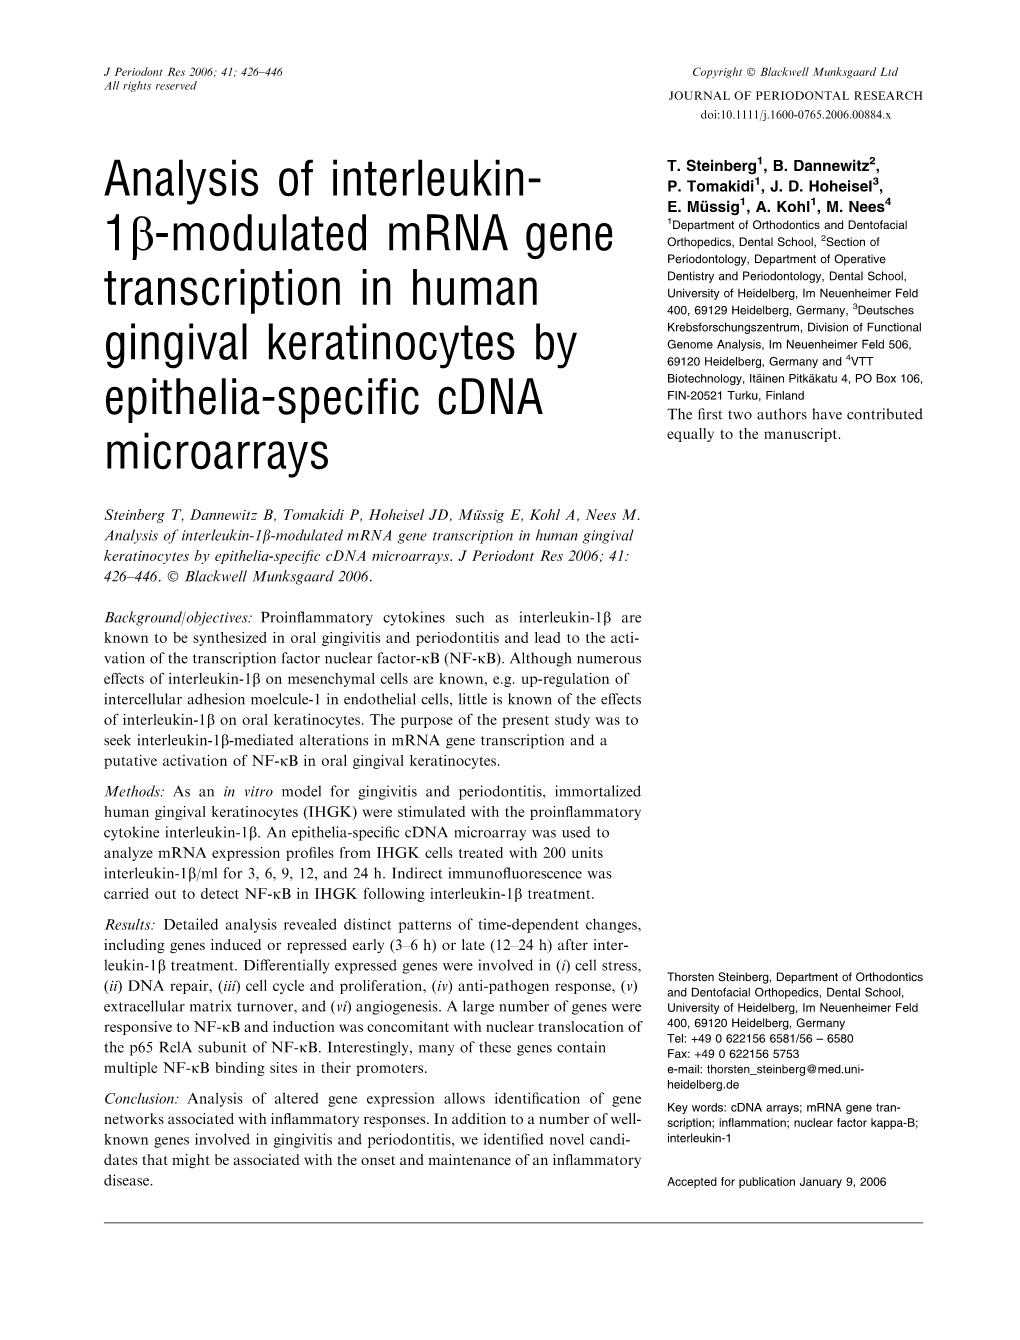 Analysis of Interleukin- 1B-Modulated Mrna Gene Transcription in Human